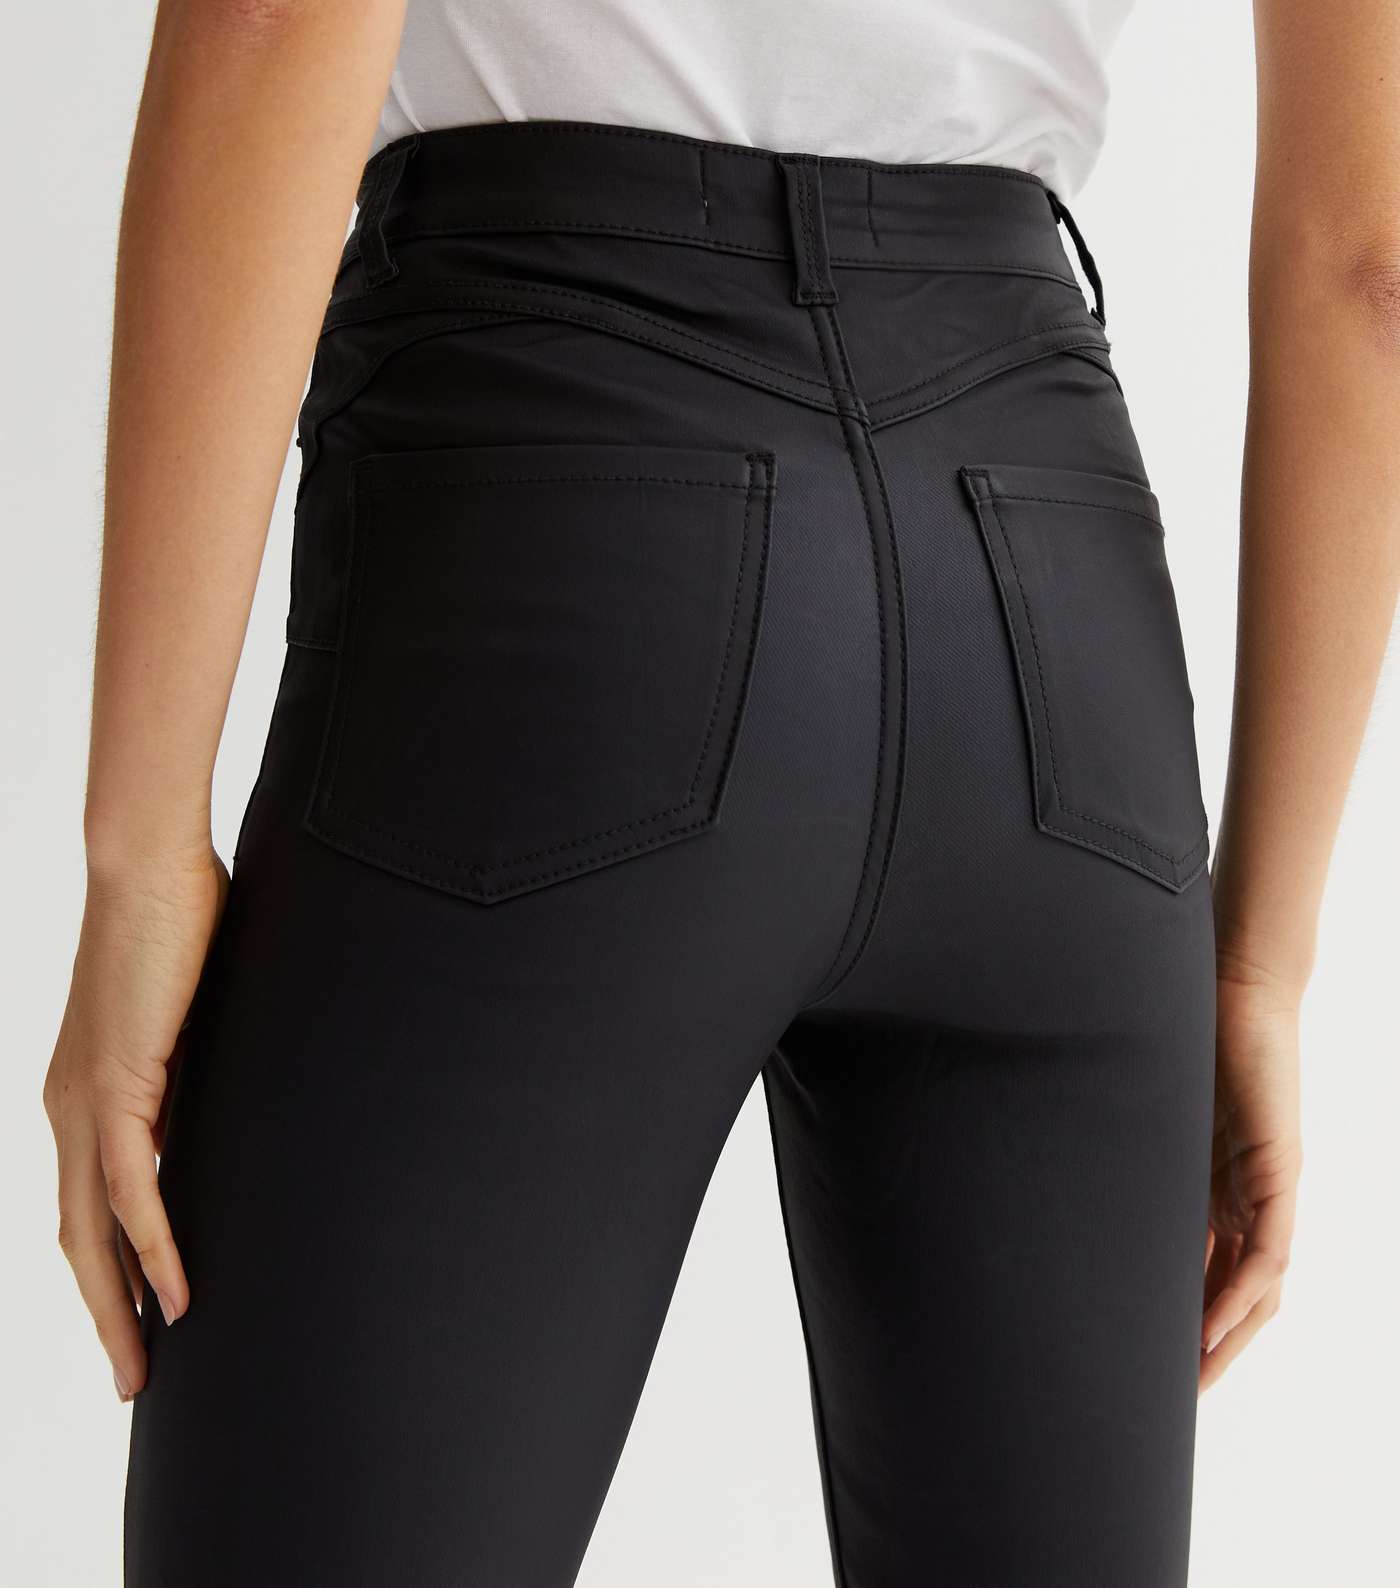 Black Coated Leather-Look Lift & Shape Jenna Skinny Jeans Image 3